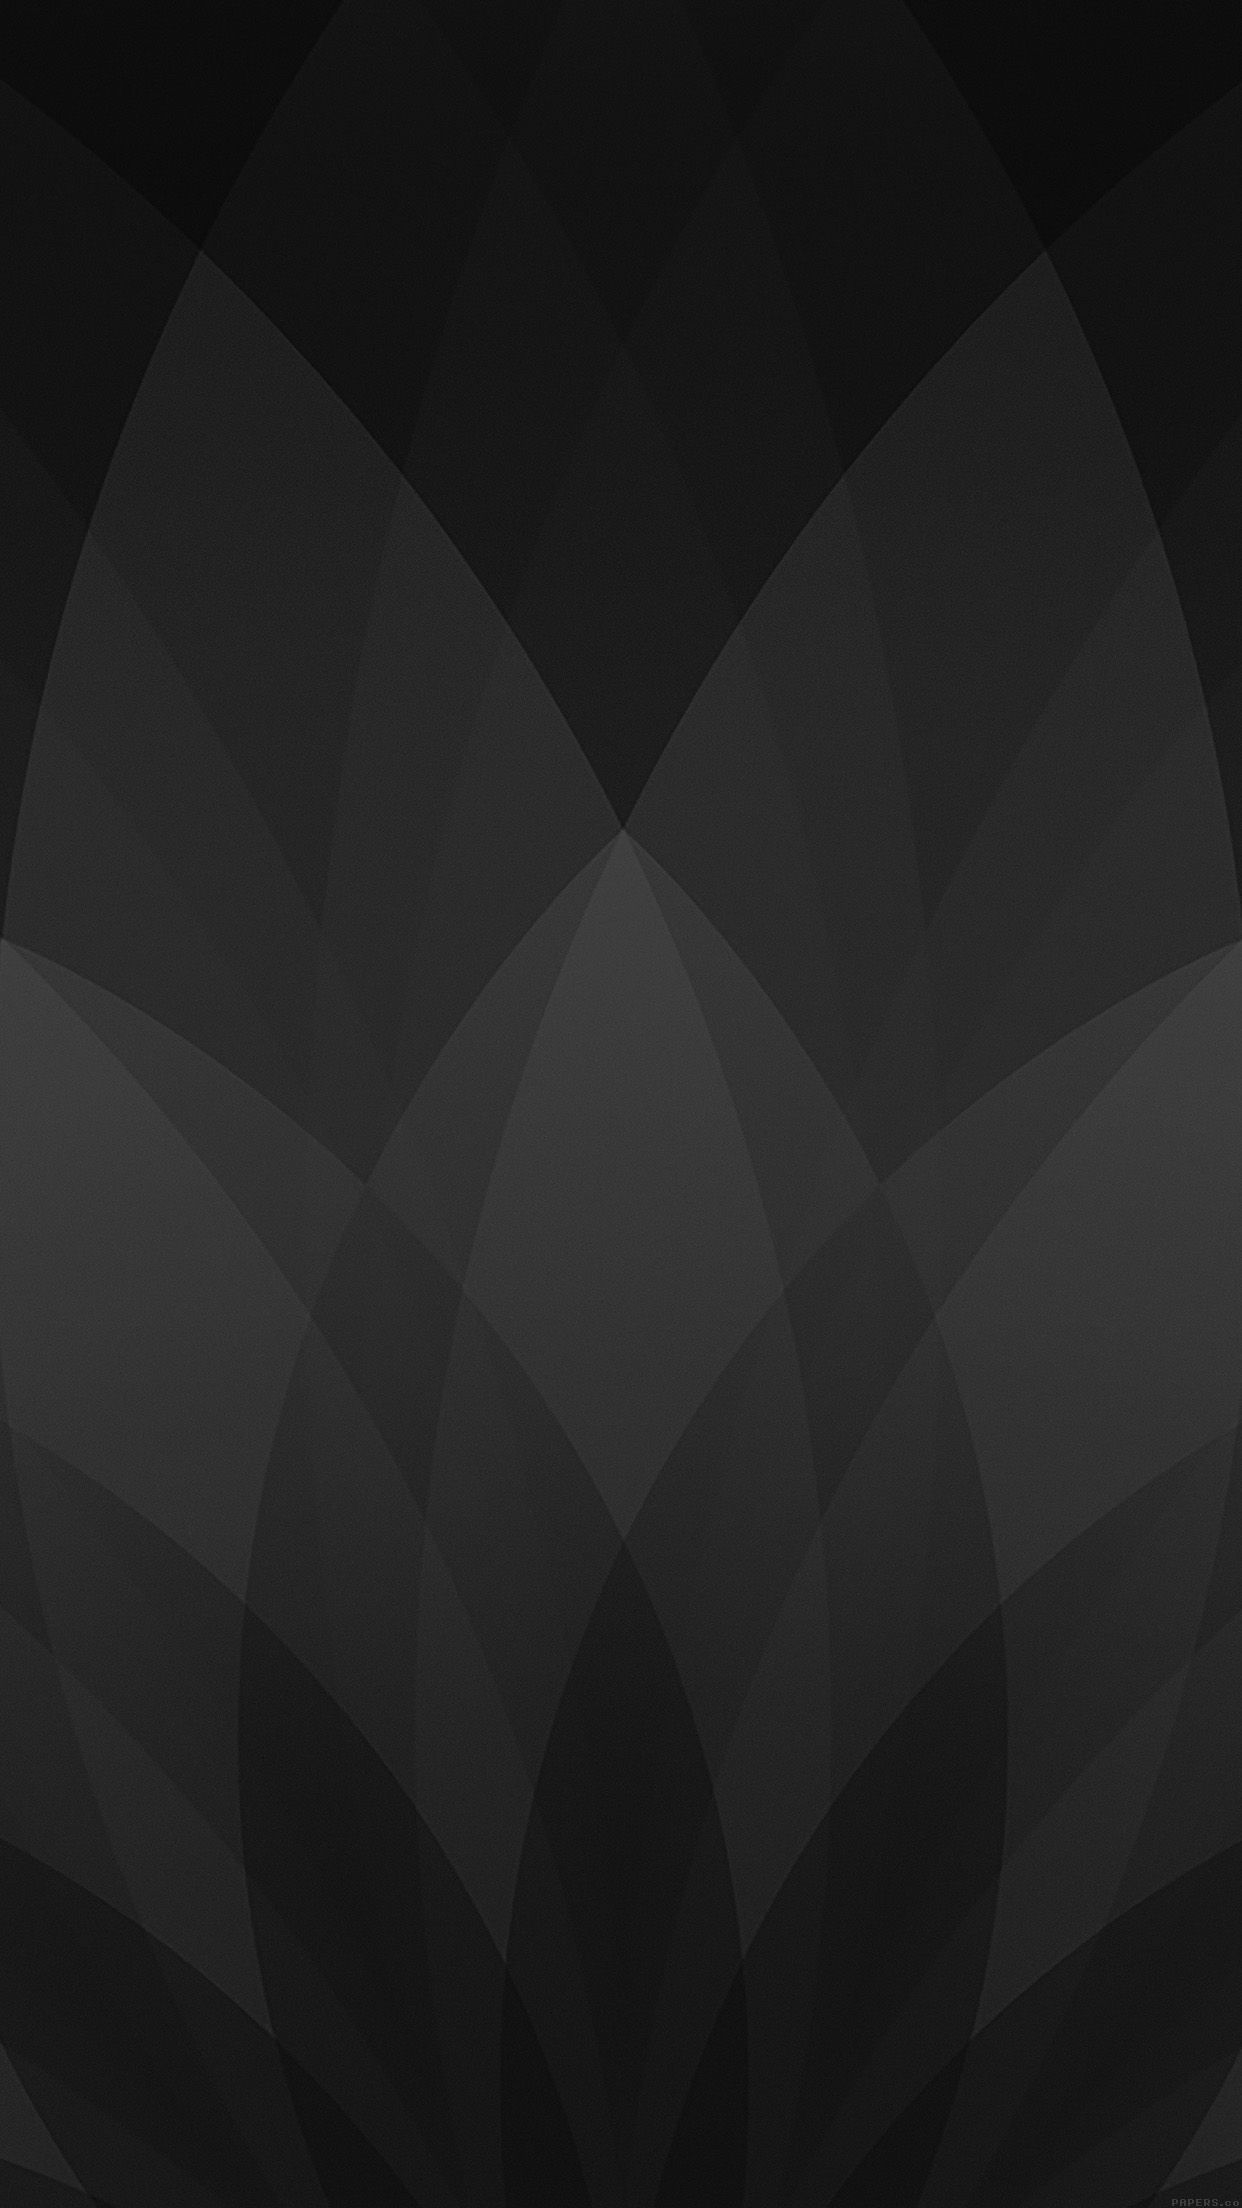 Apple in Dark Shade Wallpaper in jpg format for free download. Dark wallpaper, iPhone iPhone black